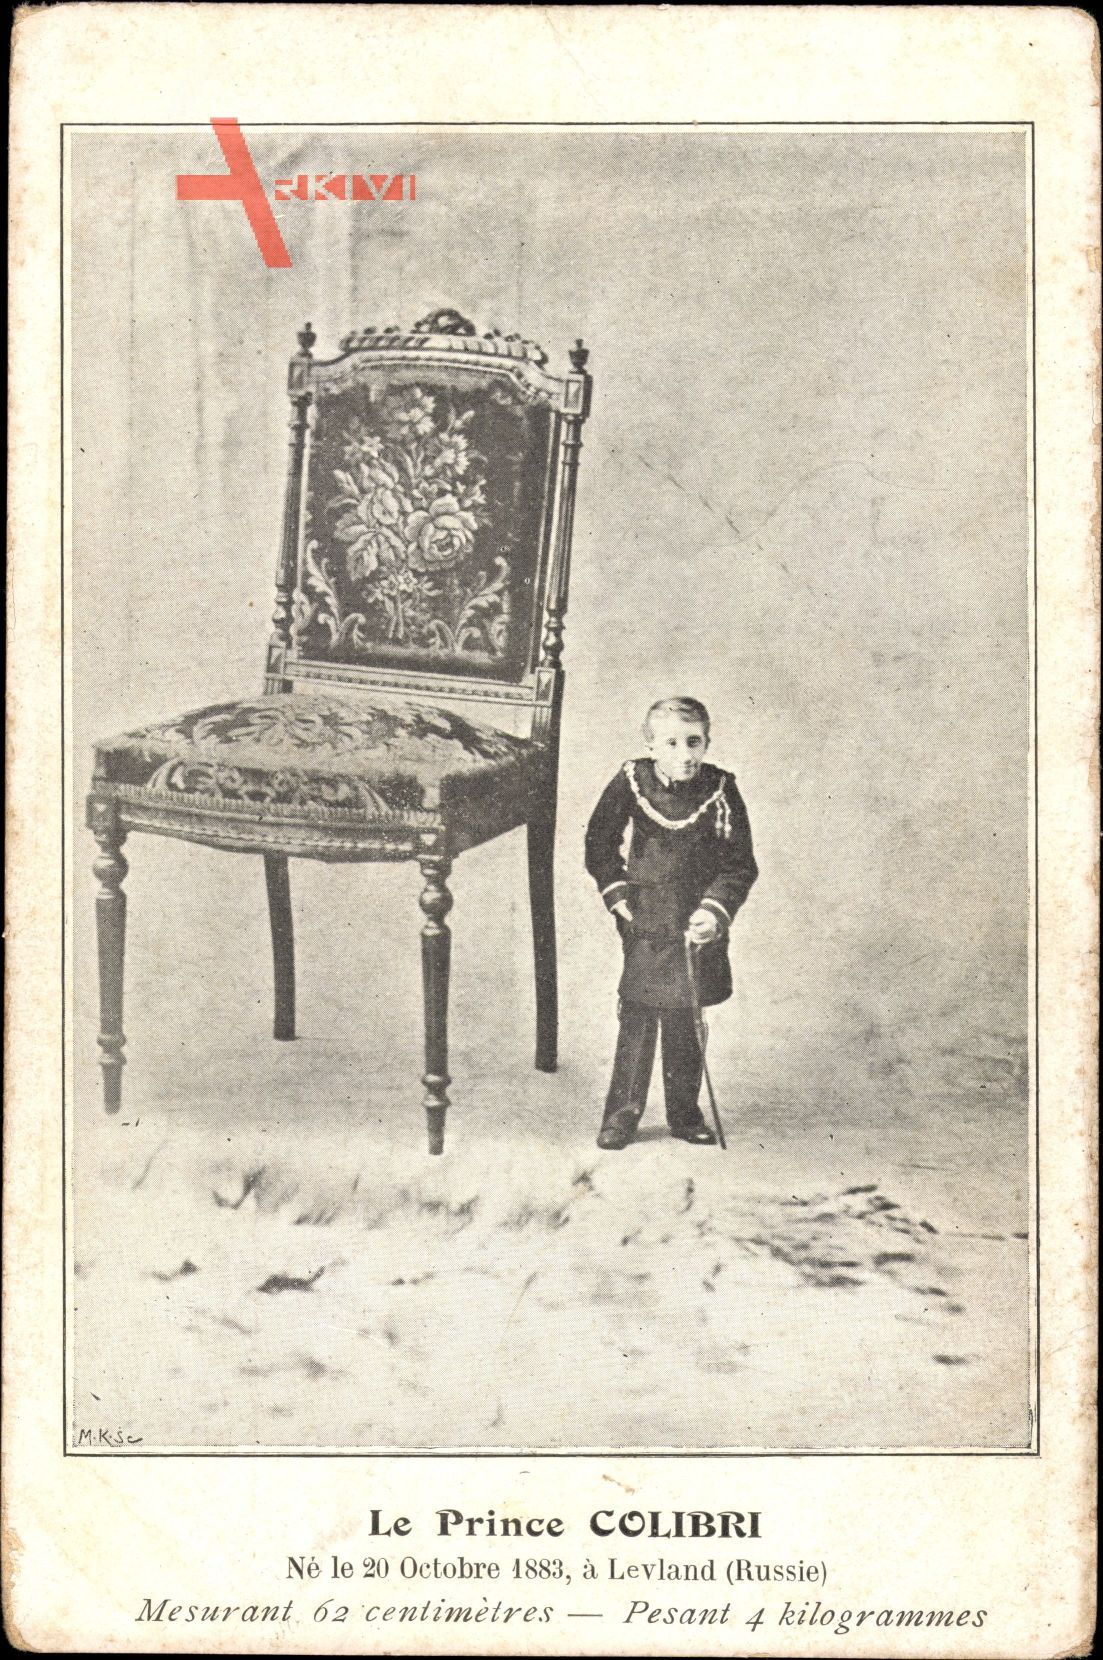 Le Prince Colibri, Ne le 20 Octobre 1883 a Levland, Russie, 62 centimetres